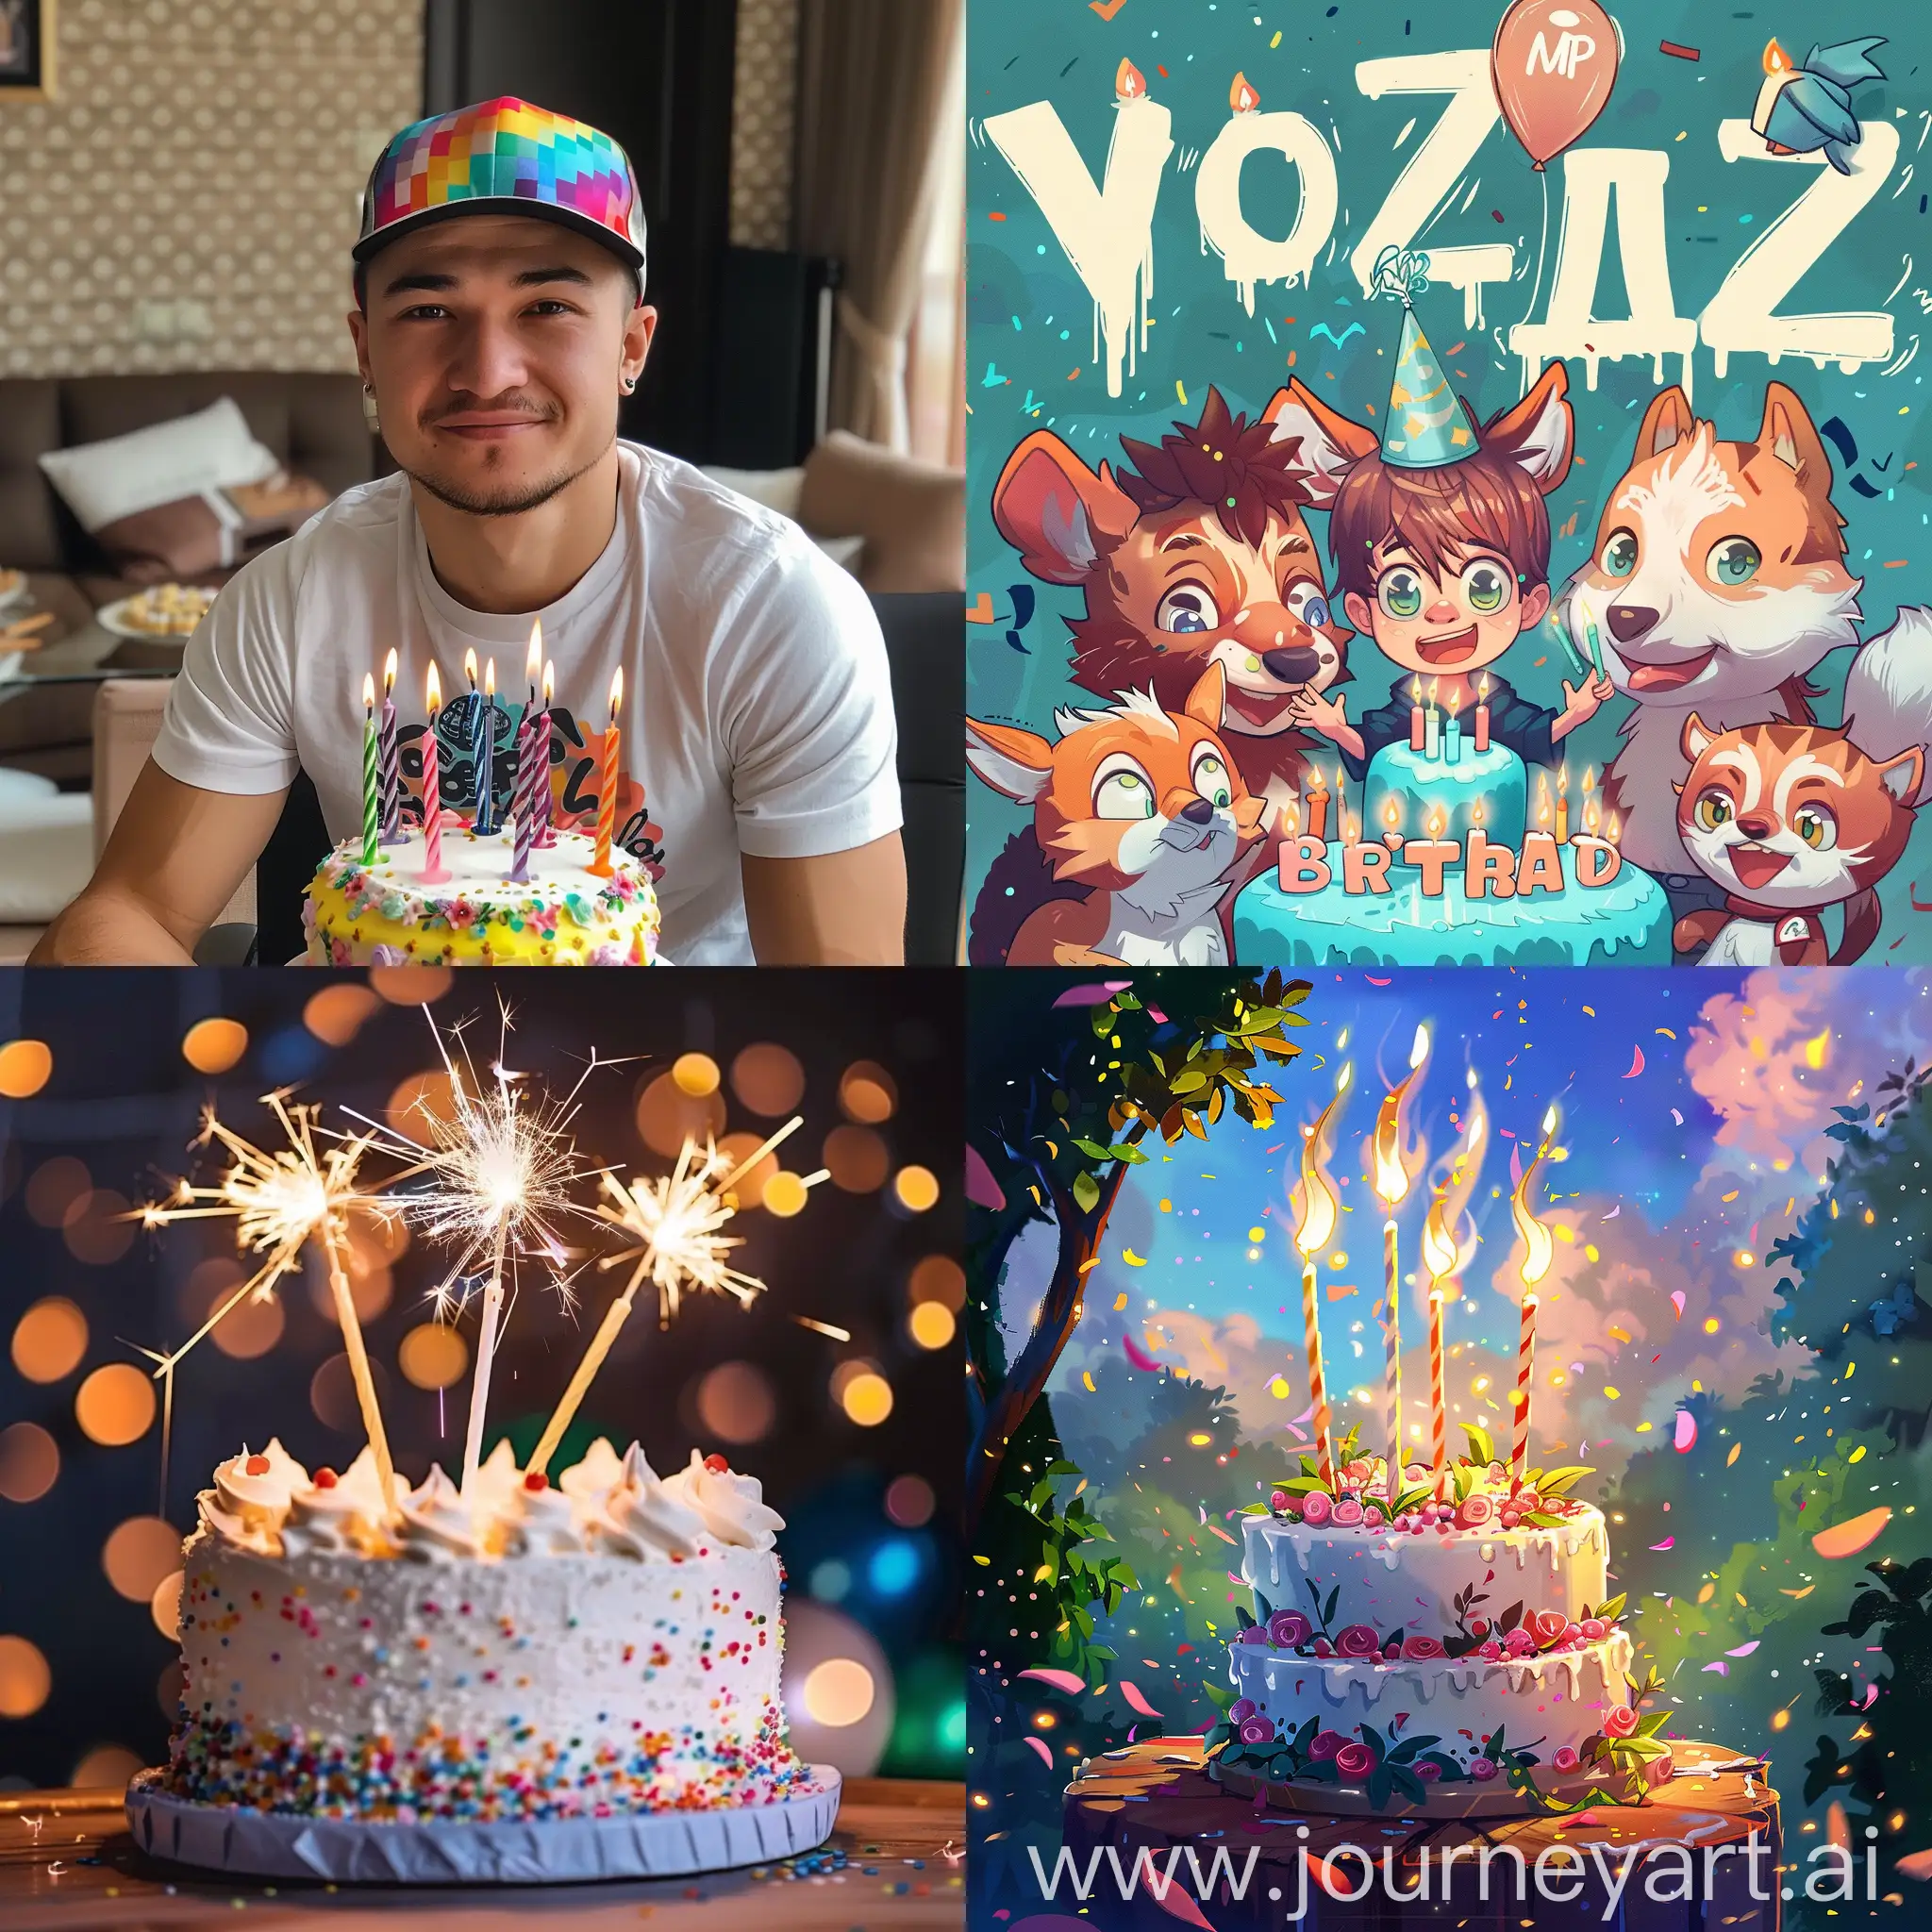 Yozh-Celebrates-Birthday-with-Joyful-Expression